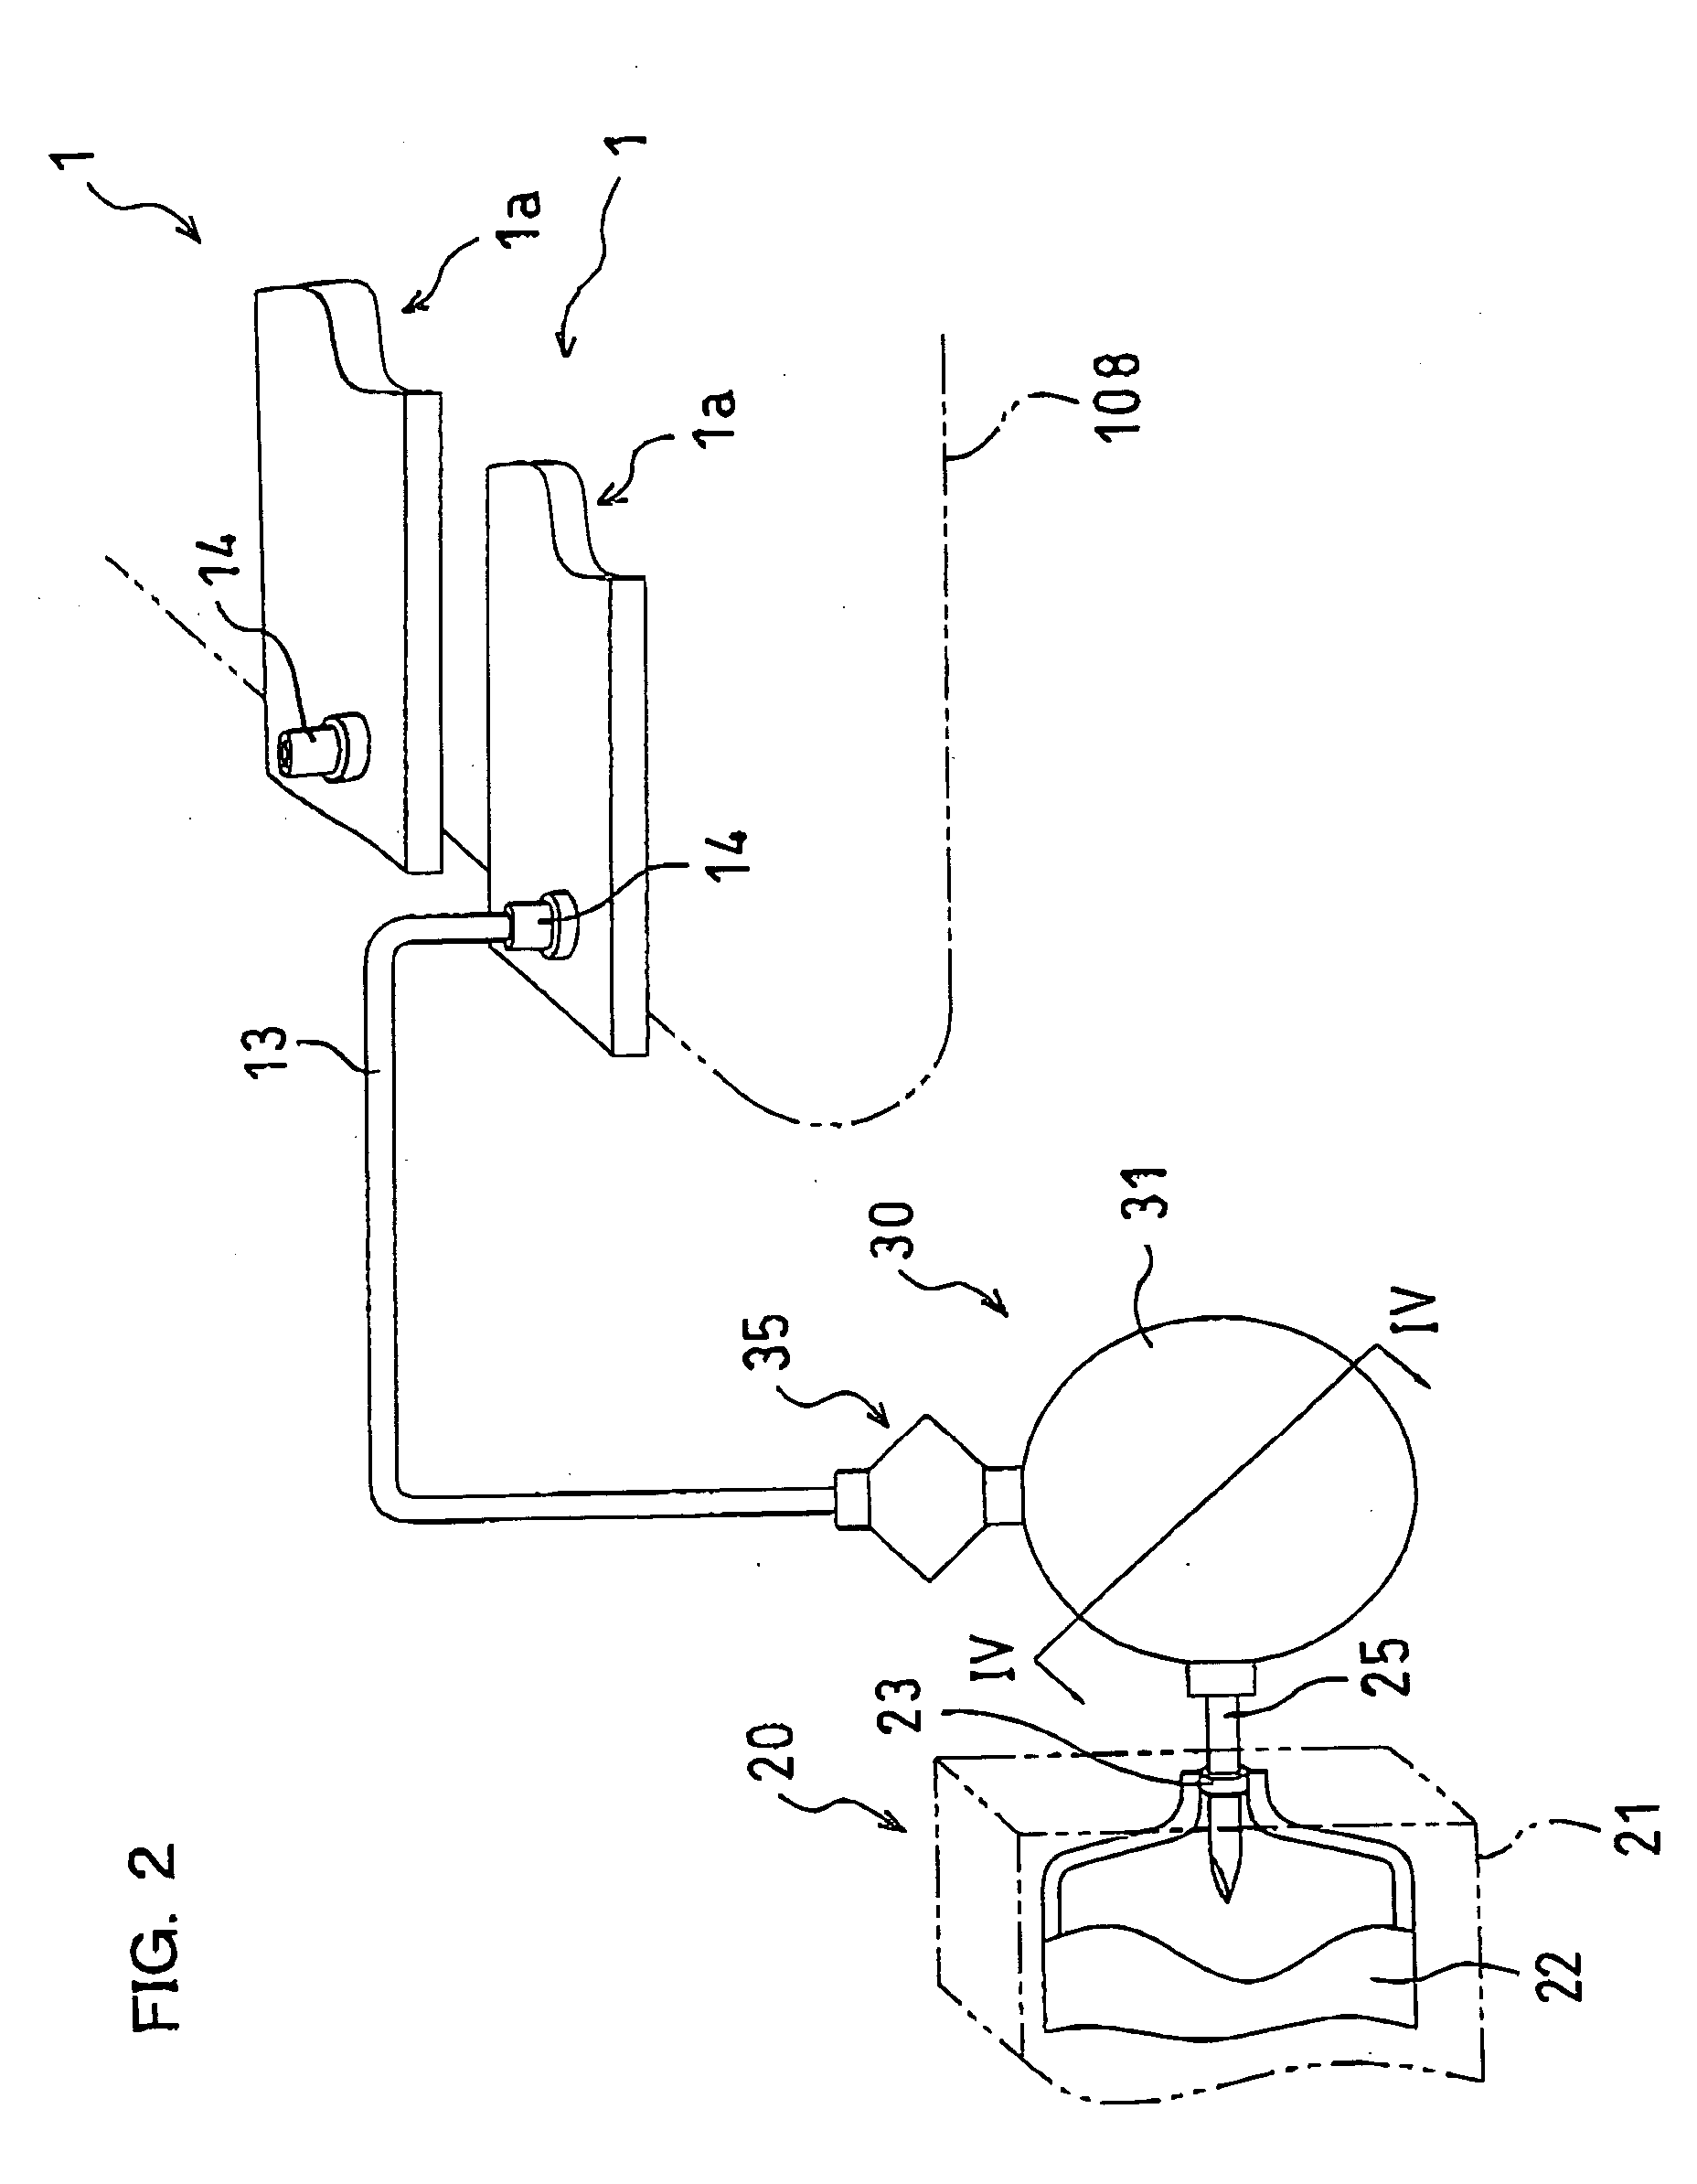 Ink-jet recording apparatus including pump, method for controlling the ink-jet recording apparatus and method for controlling the pump